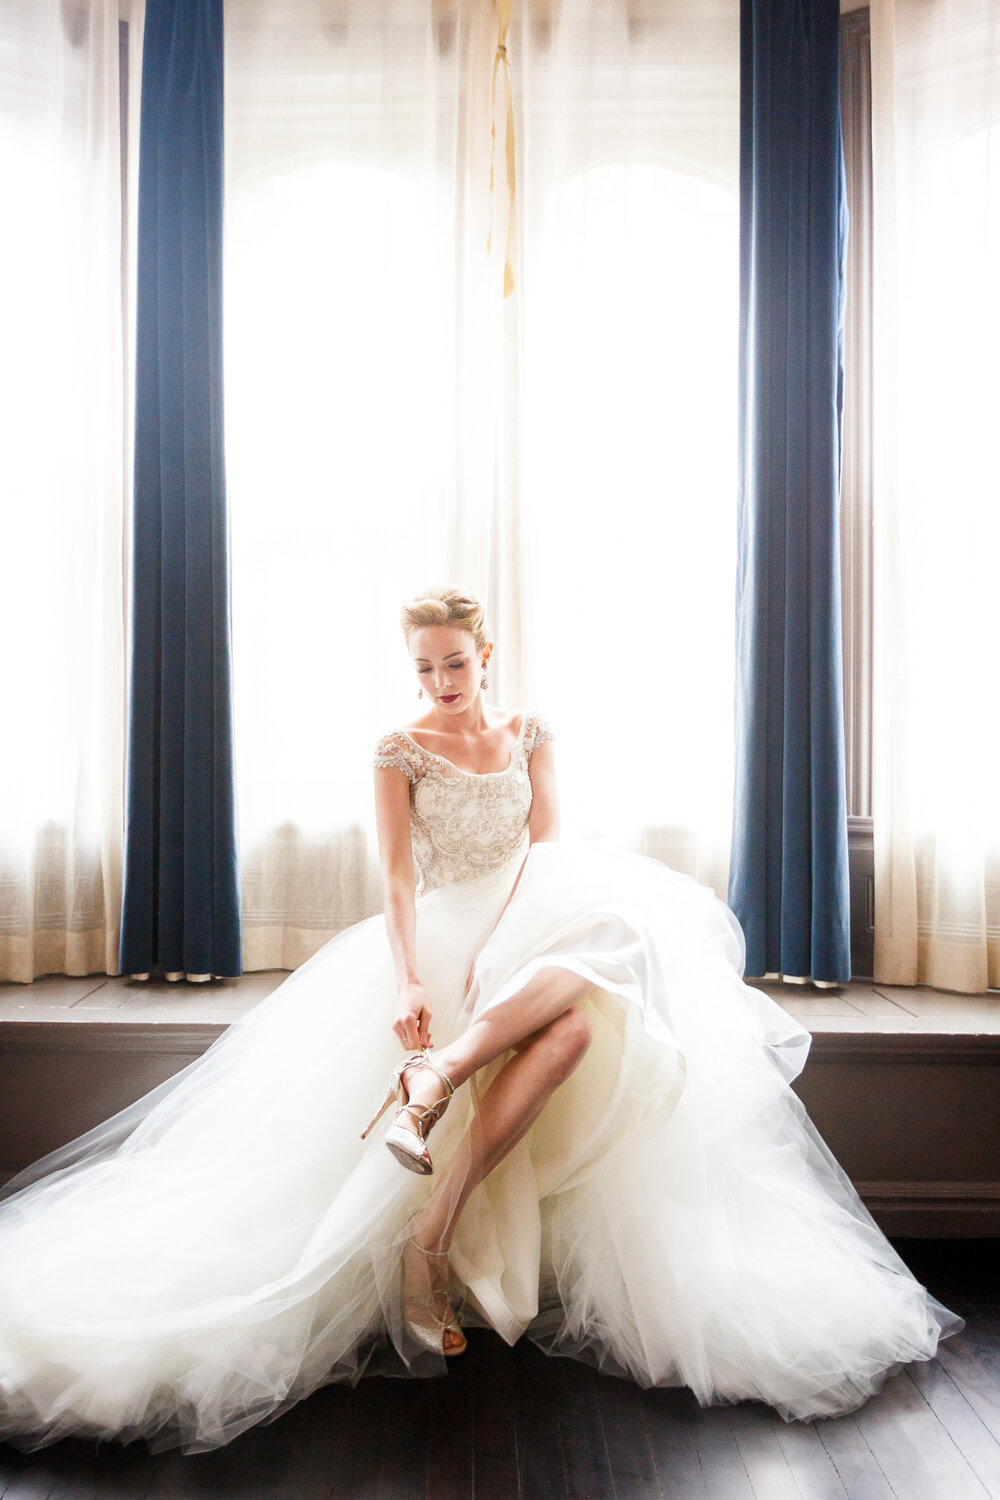 Falter wedding @ Highline Hotel